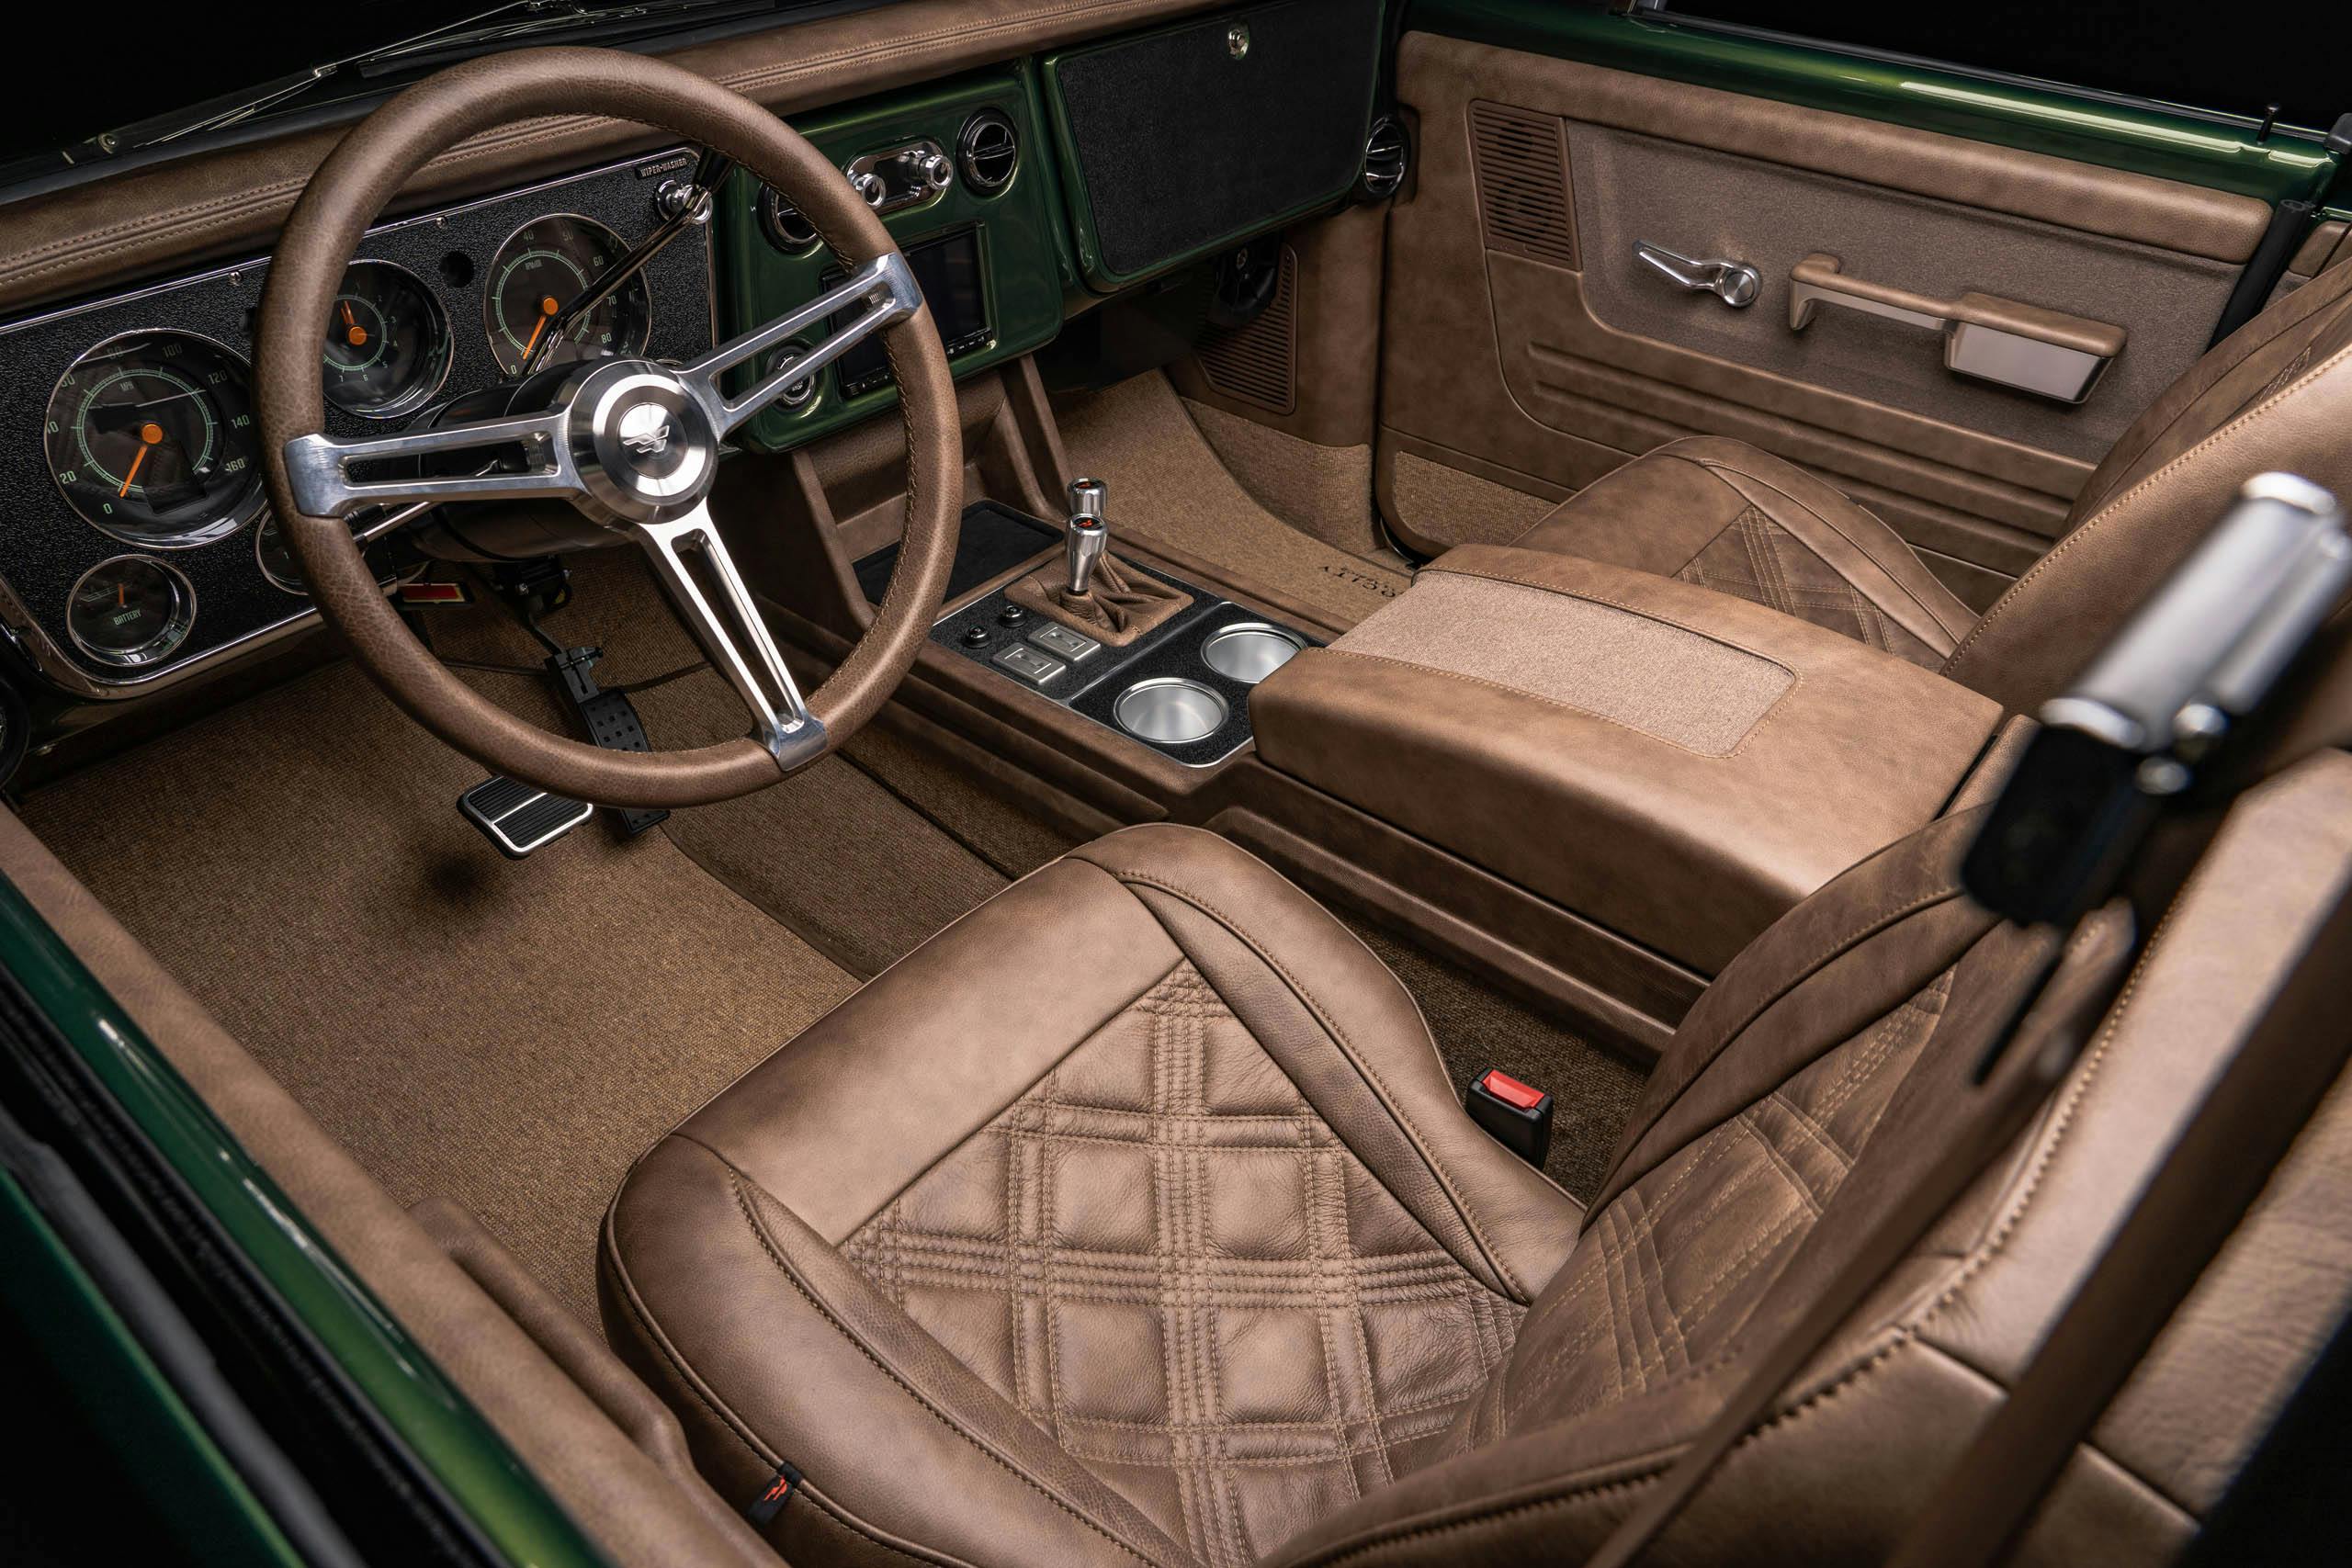 Velocity Modern Classics K5 Chevy Blazer restomod interior front cabin area